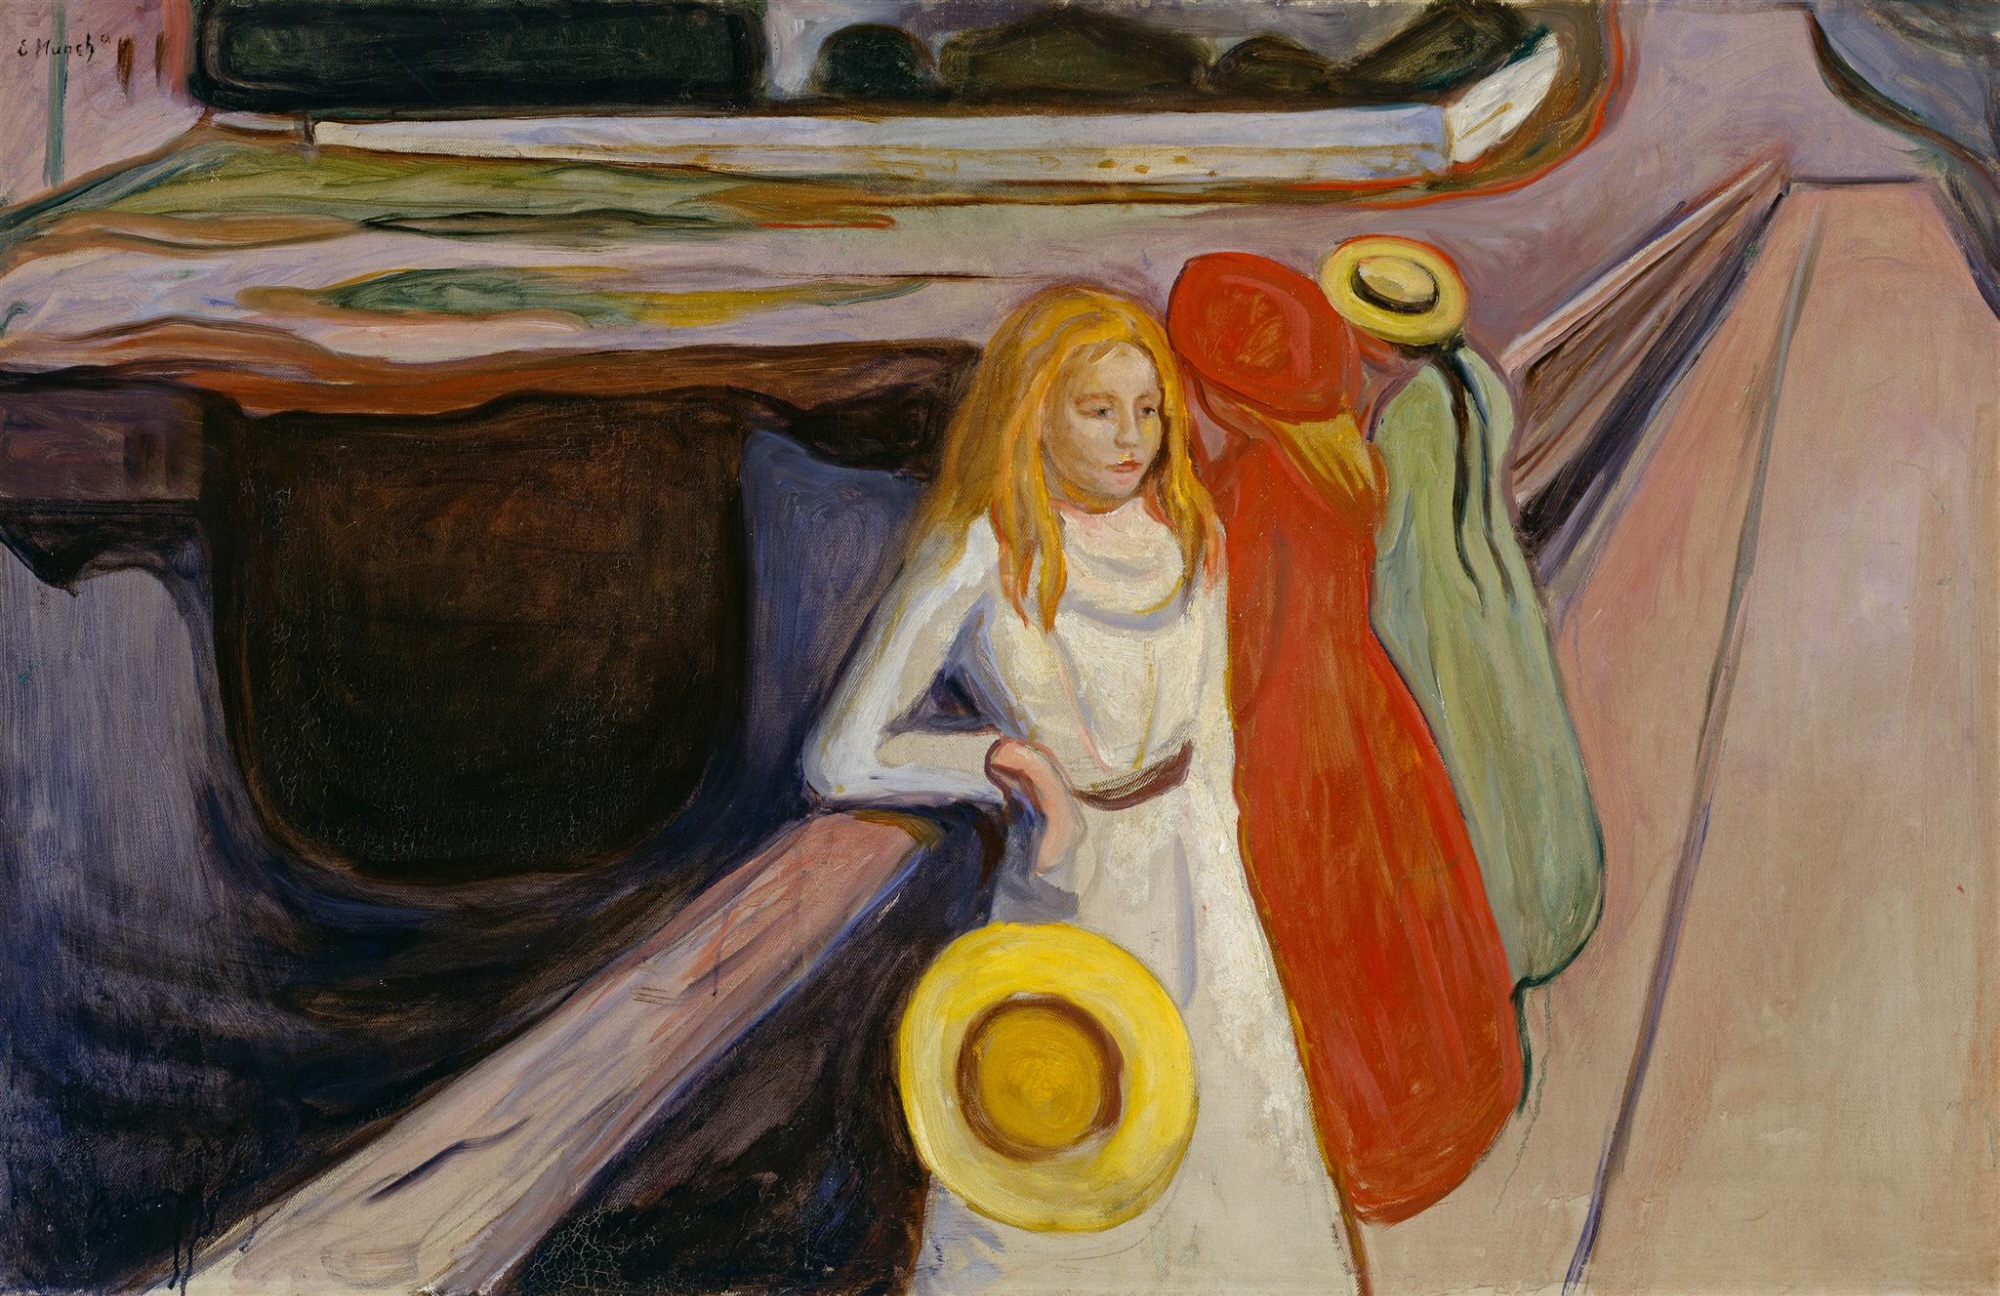 Muchachas en el puente by Edvard Munch - 1901 - 83,8 x 129,6 cm Hamburger Kunsthalle